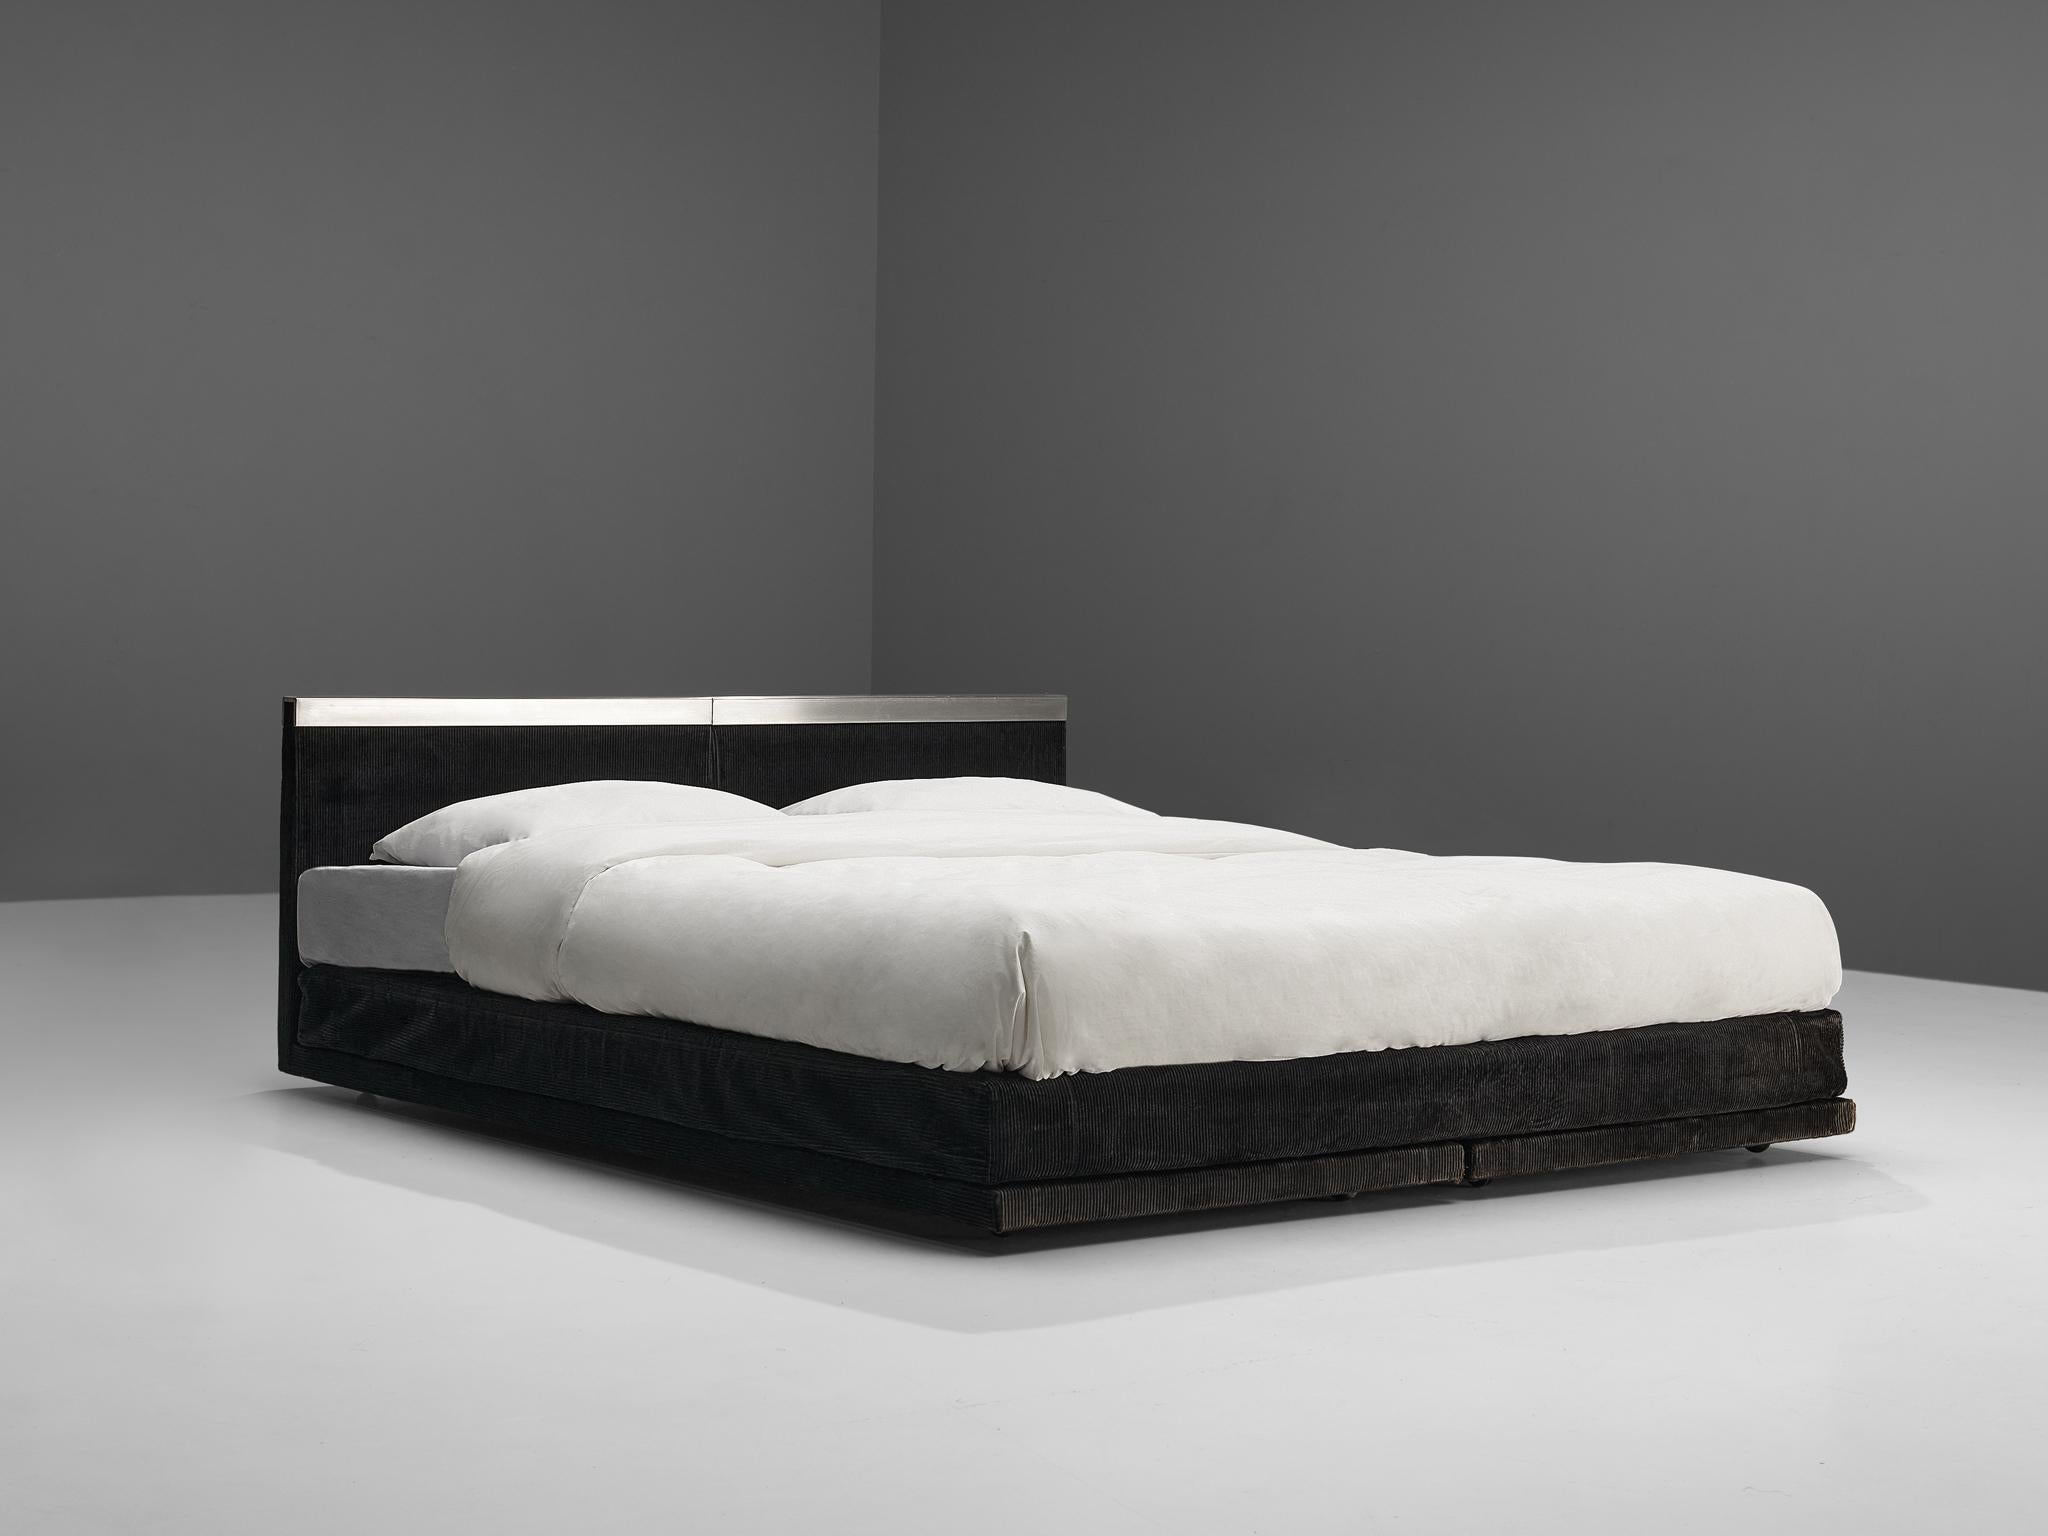 Late 20th Century Italian Custom-Made Bed by Bazzani with Aluminium Details